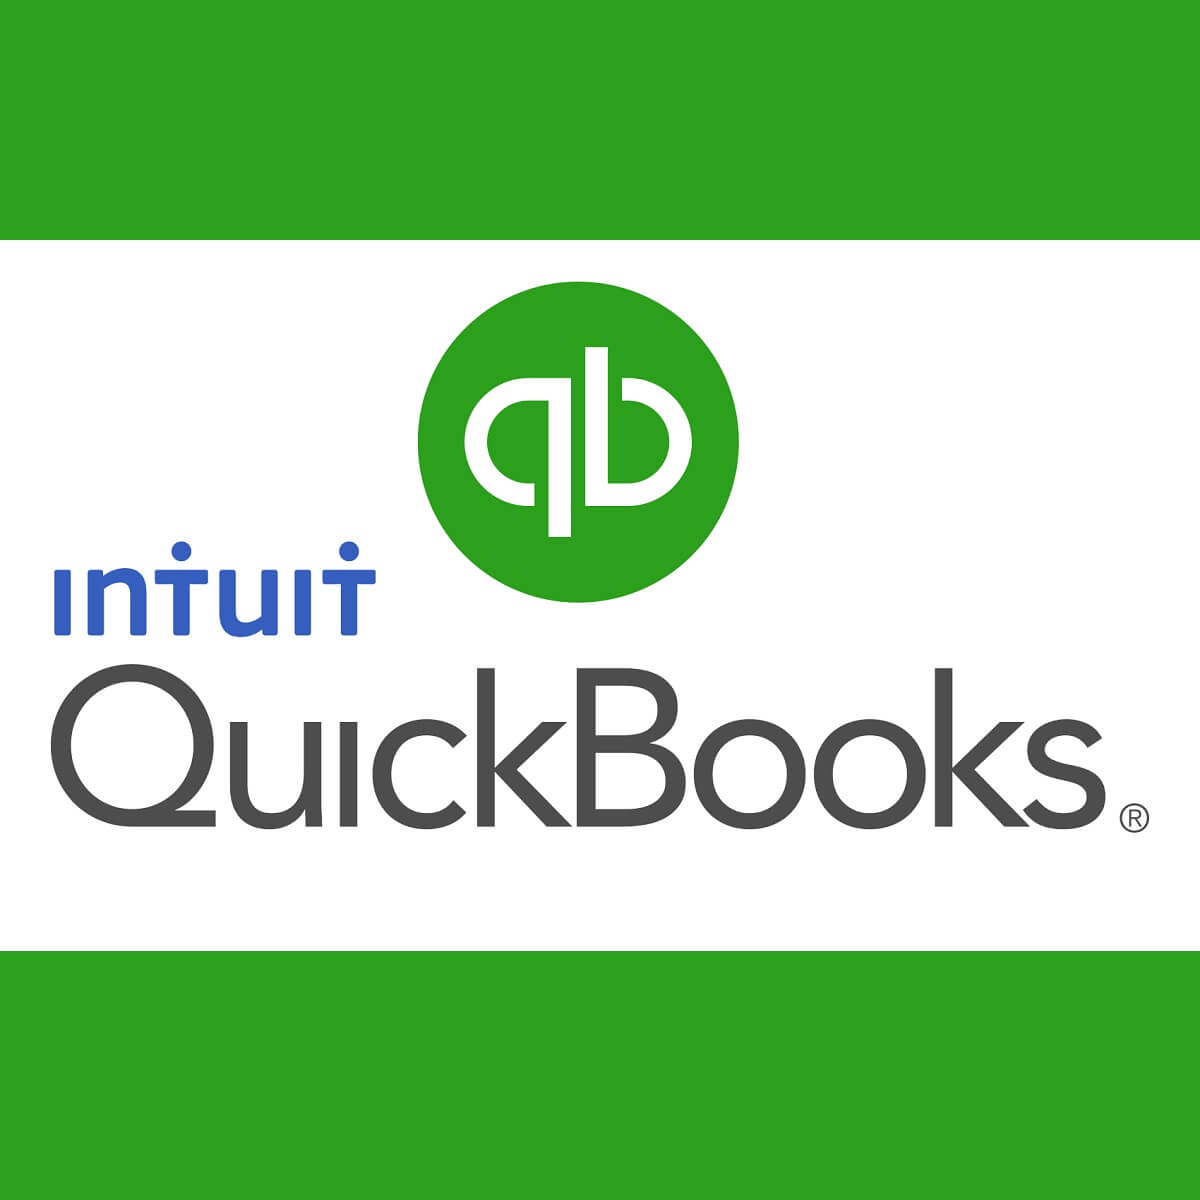 If you use QuickBooks, upgrade to Windows 10 now